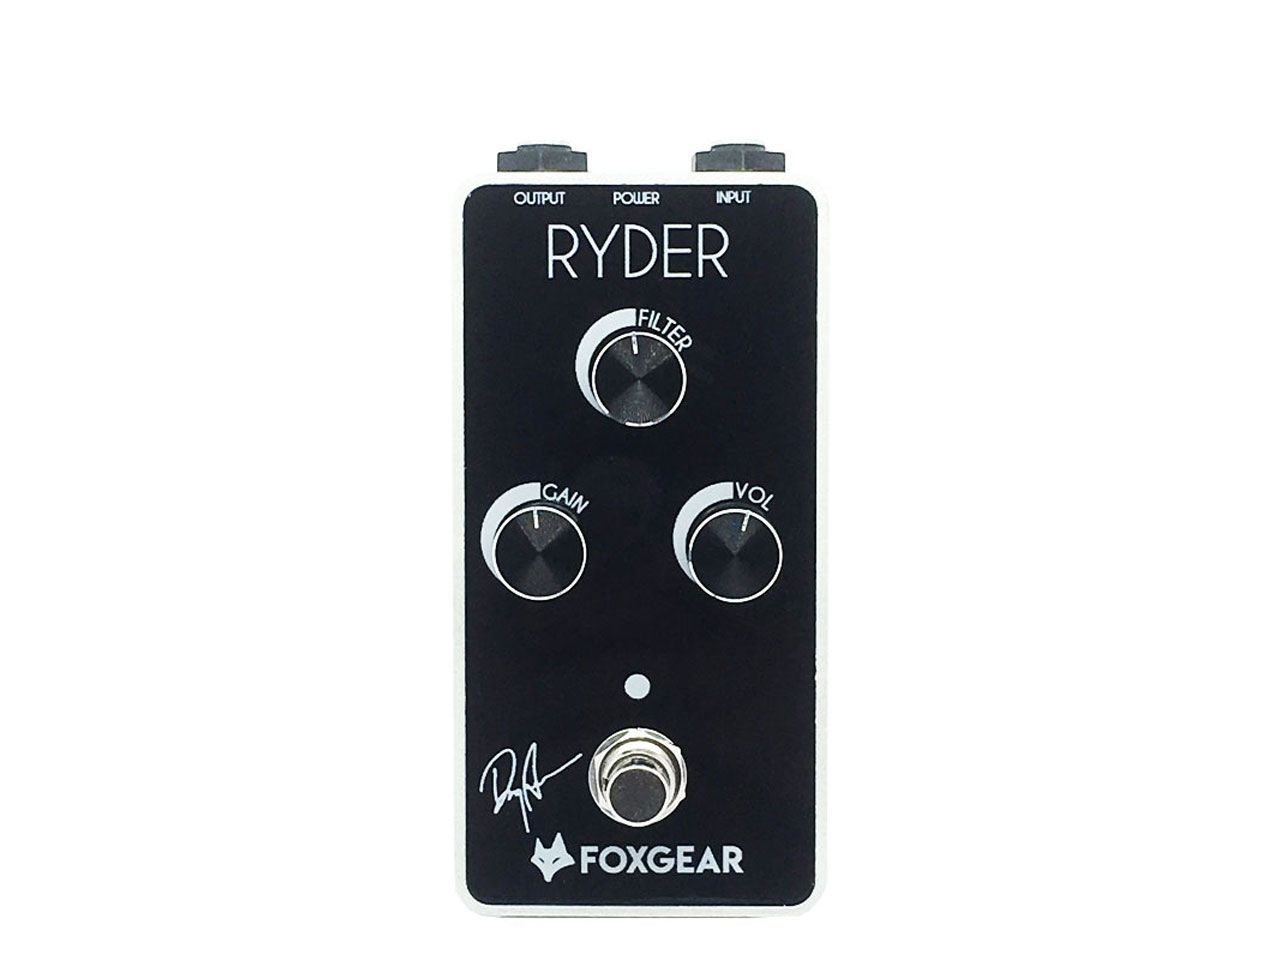 FOXGEAR(フォックスギア) RYDER -Doug Aldrich’s Signature- (ディストーション)